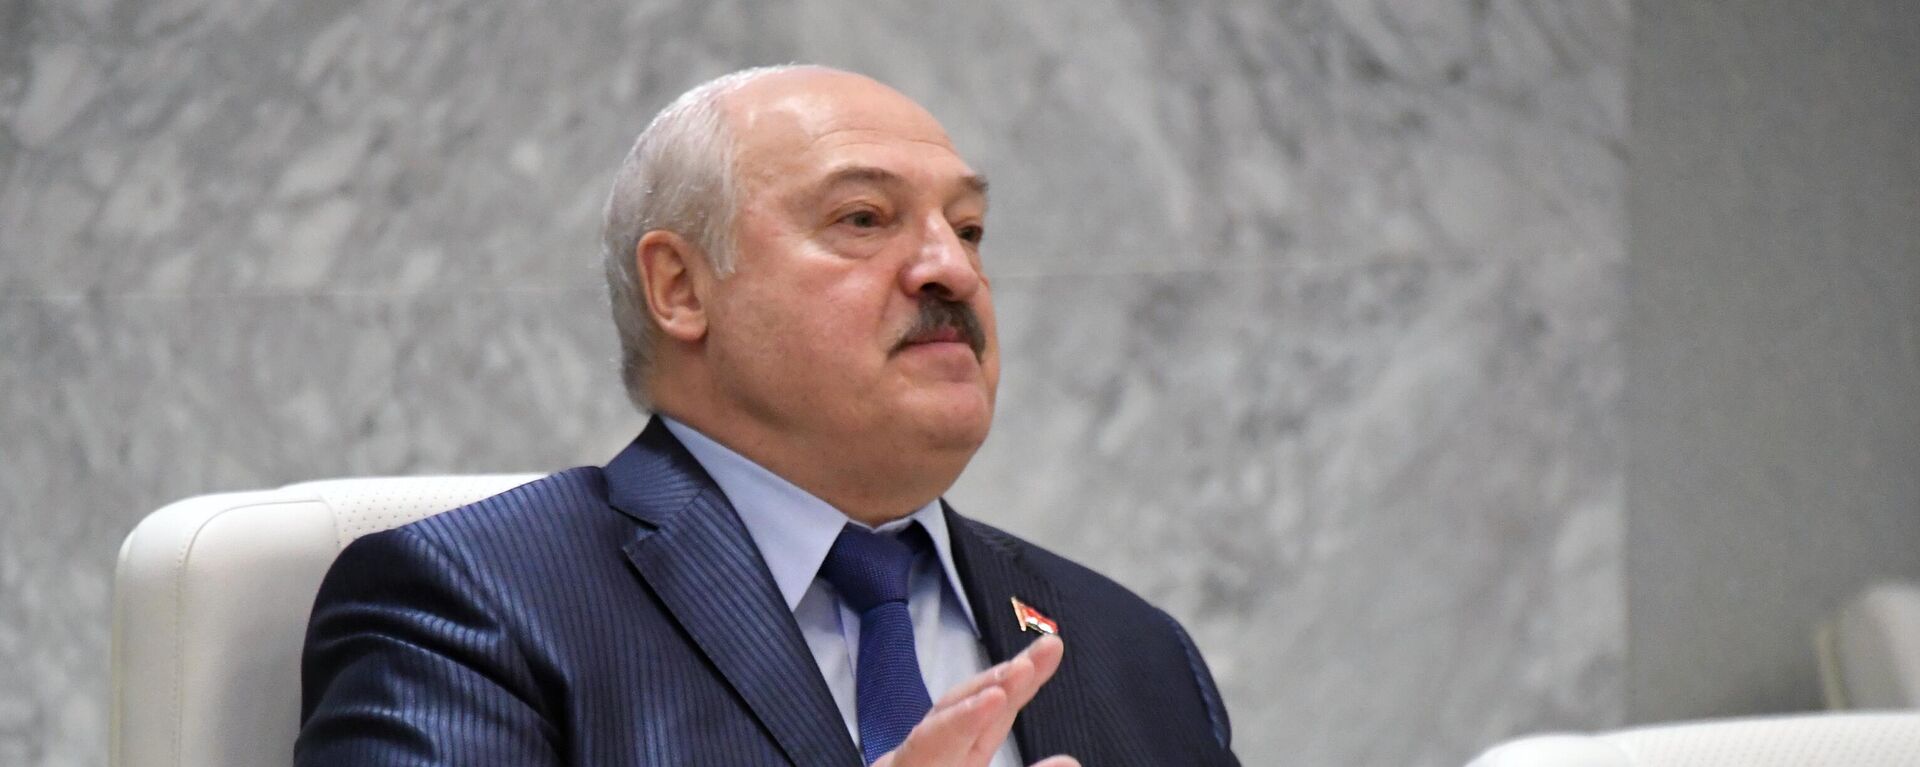 O presidente belarusso, Aleksandr Lukashenko, gesticula durante evento em Vladivostok, na Rússia, 13 de abril de 2022 - Sputnik Brasil, 1920, 23.06.2022